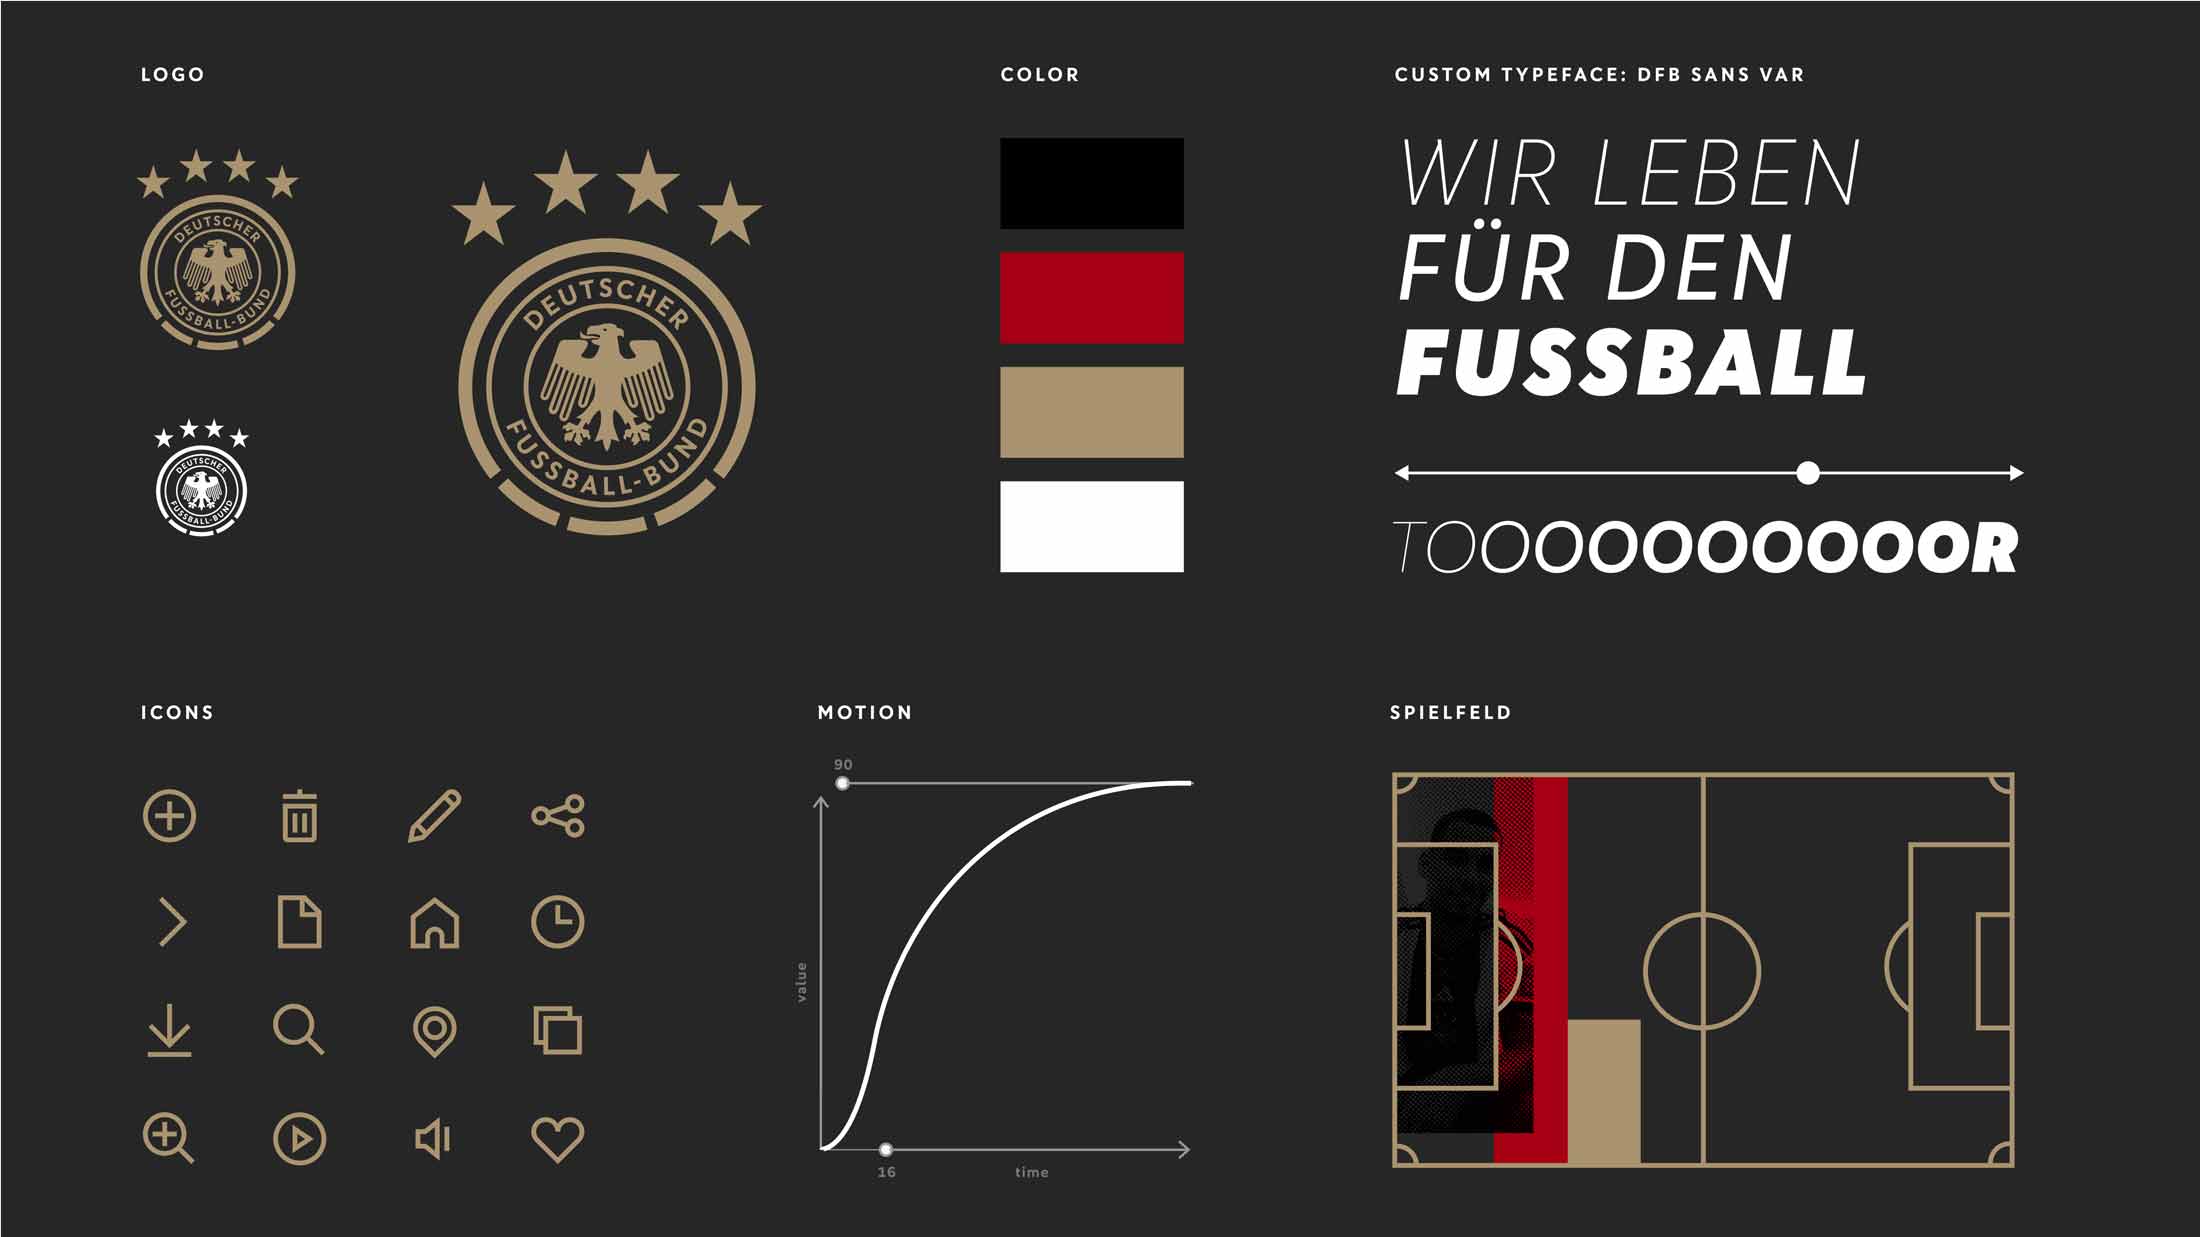 Strichpunkt re-branding DFB